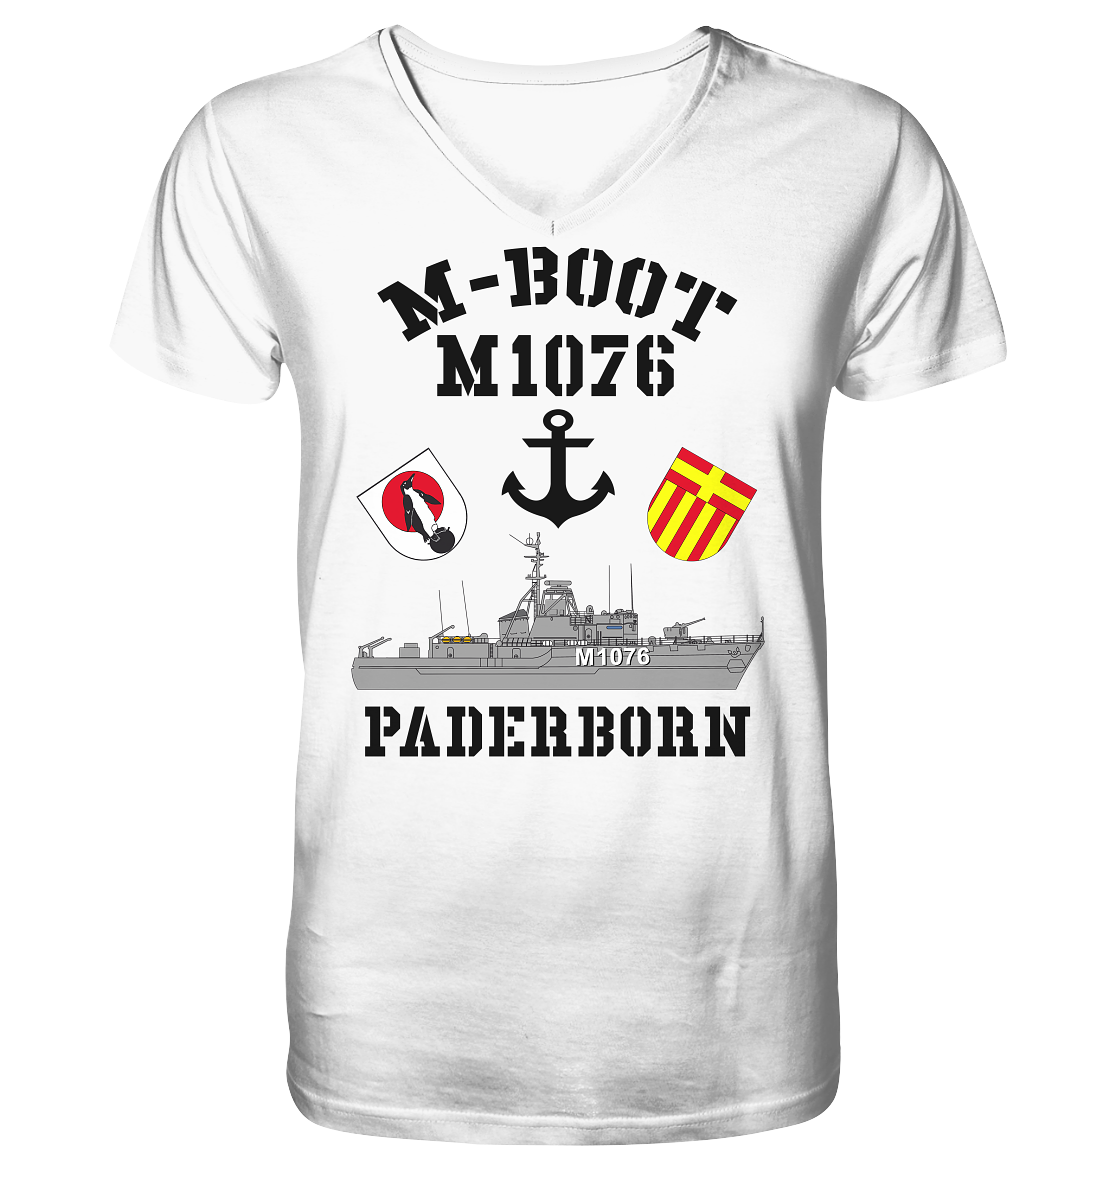 M-Boot M1076 PADERBORN Anker (HL) - Mens Organic V-Neck Shirt